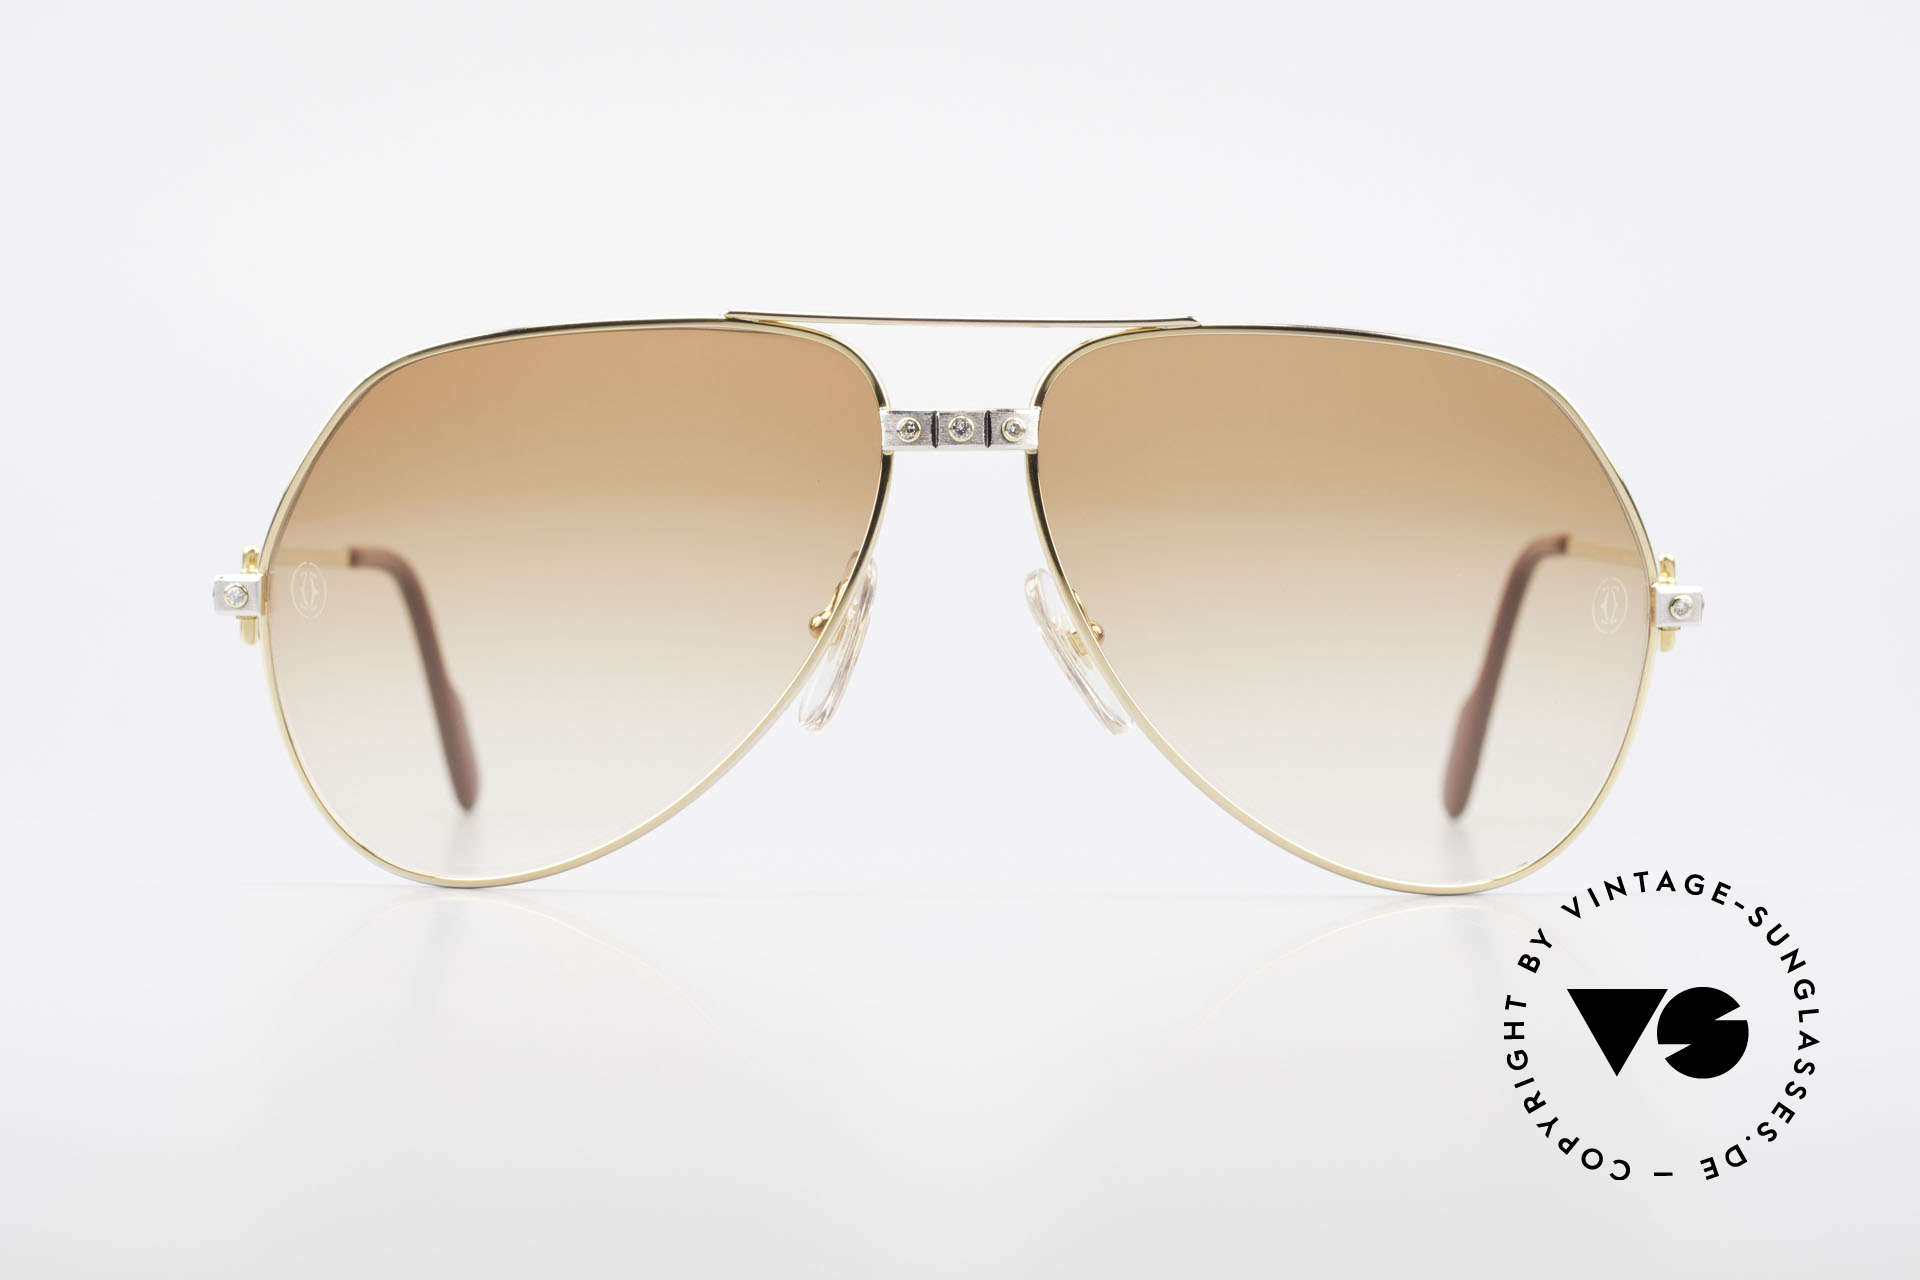 cartier sunglasses with diamonds